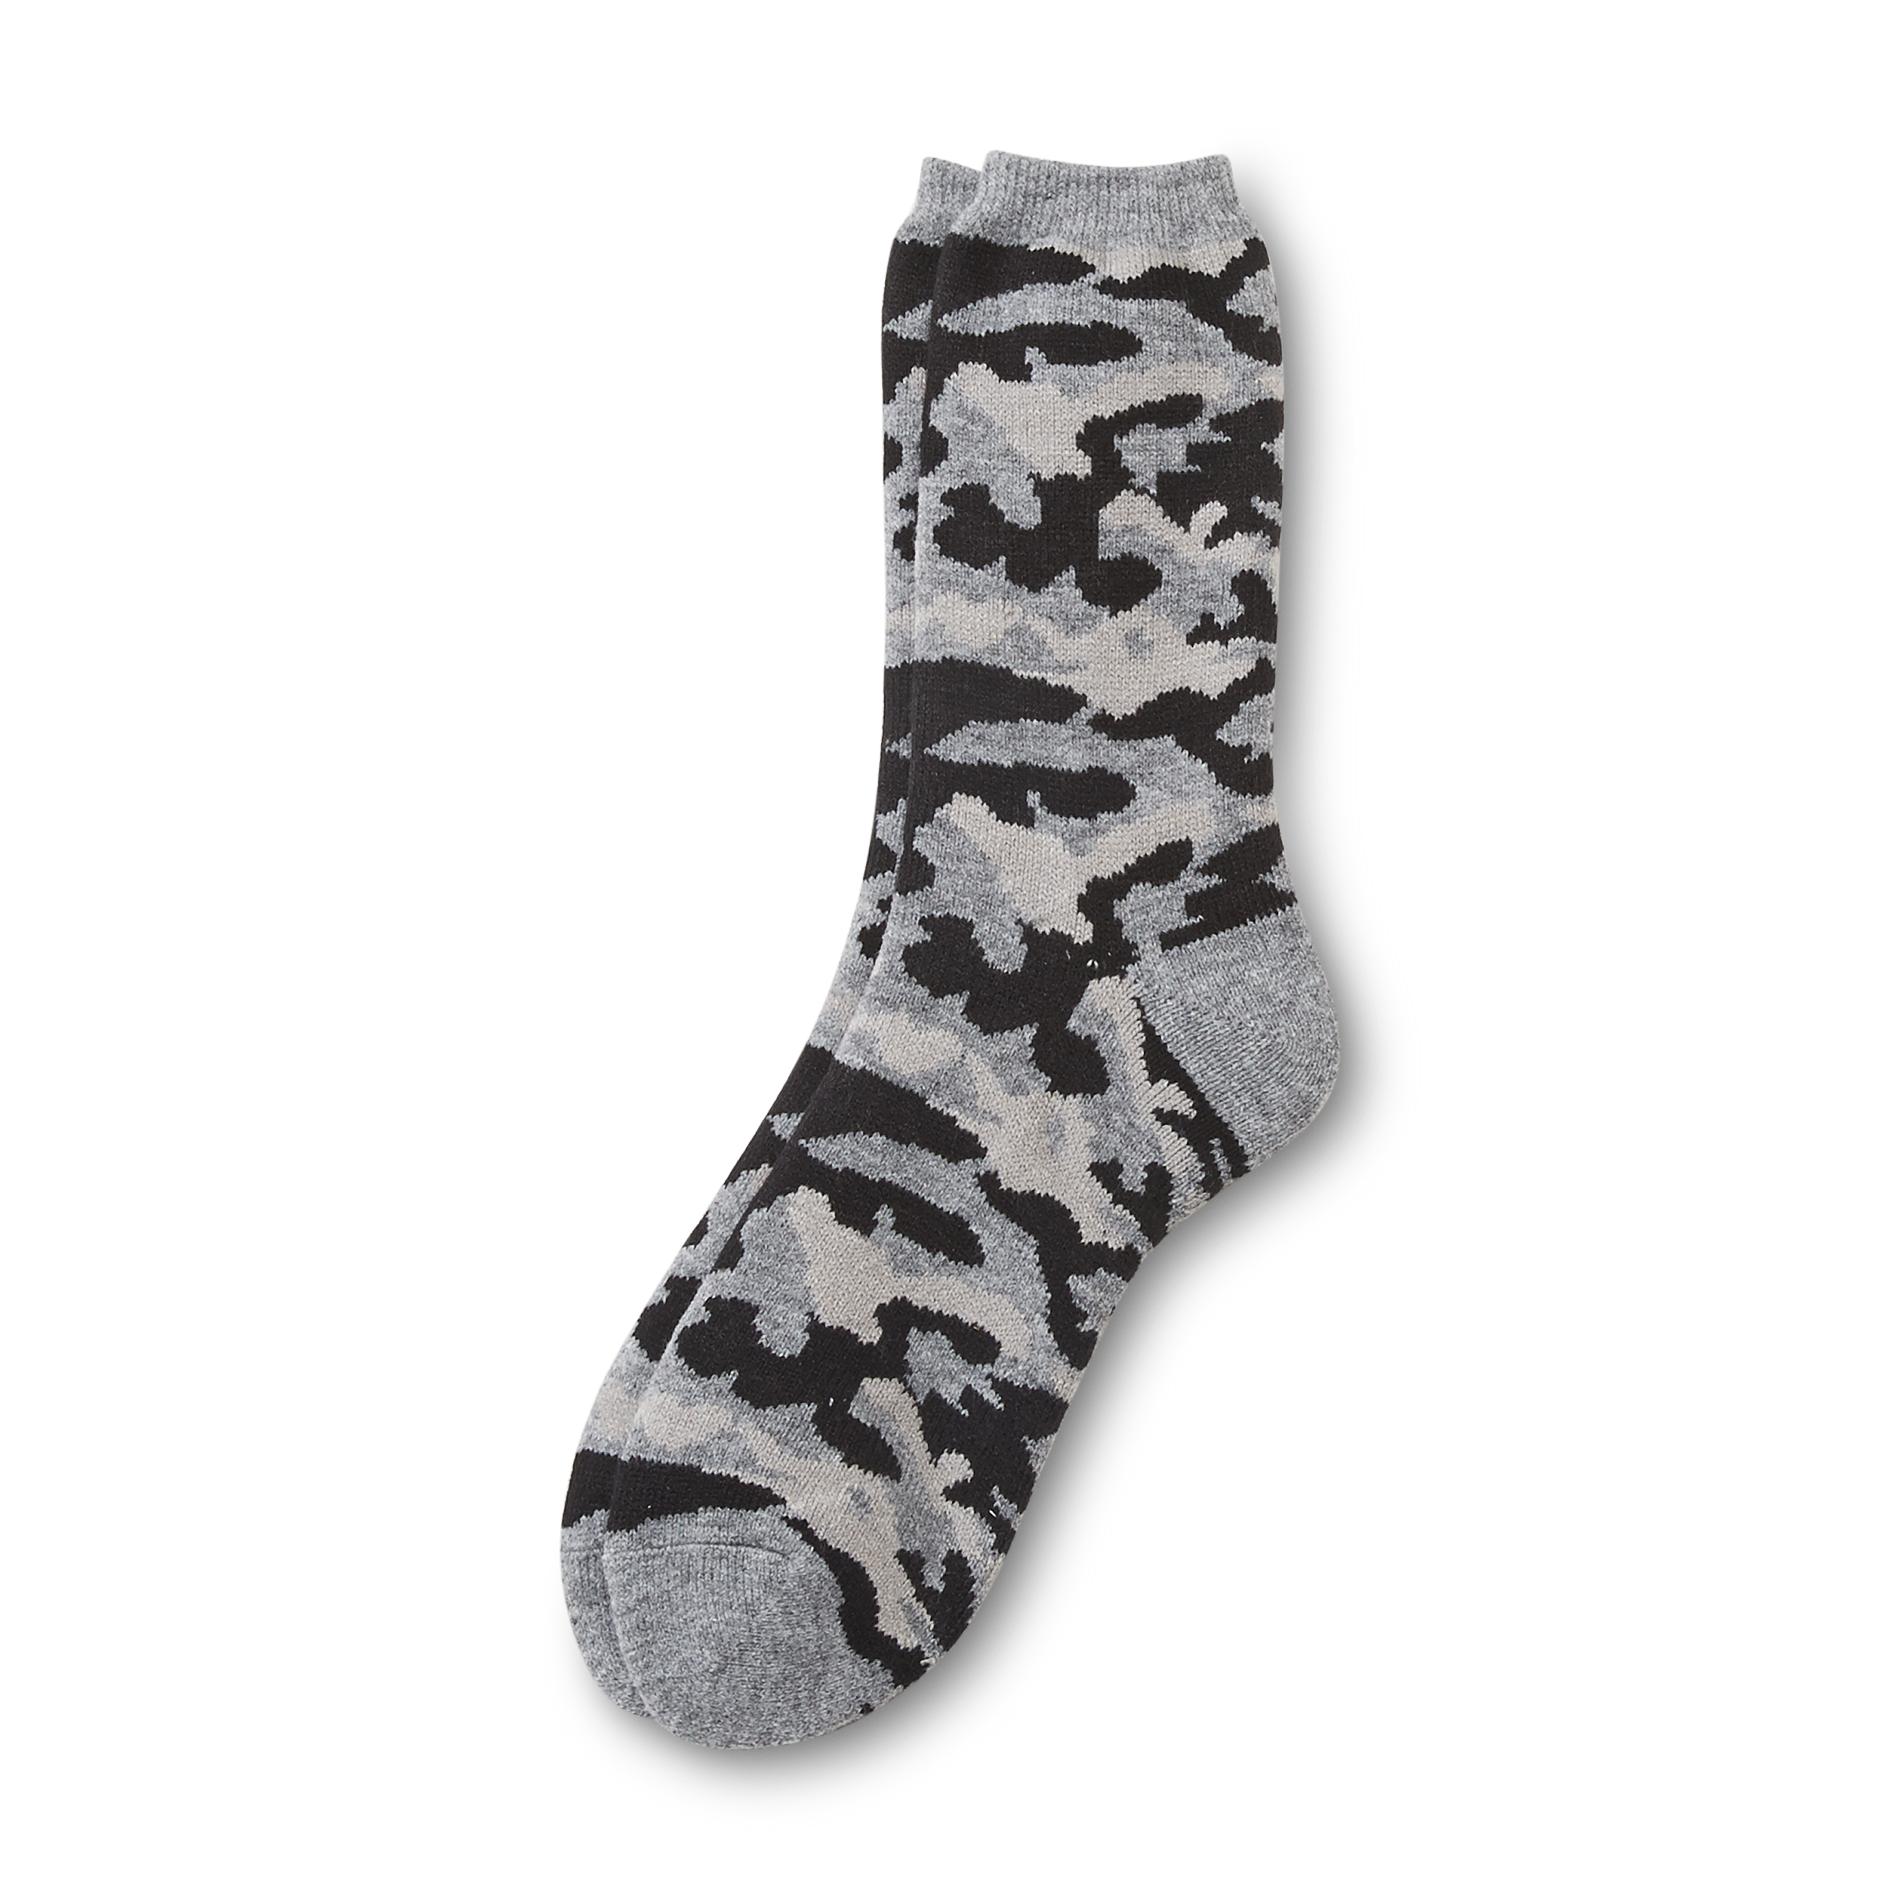 Joe Boxer Men's Double-Knit Slipper Socks - Camouflage